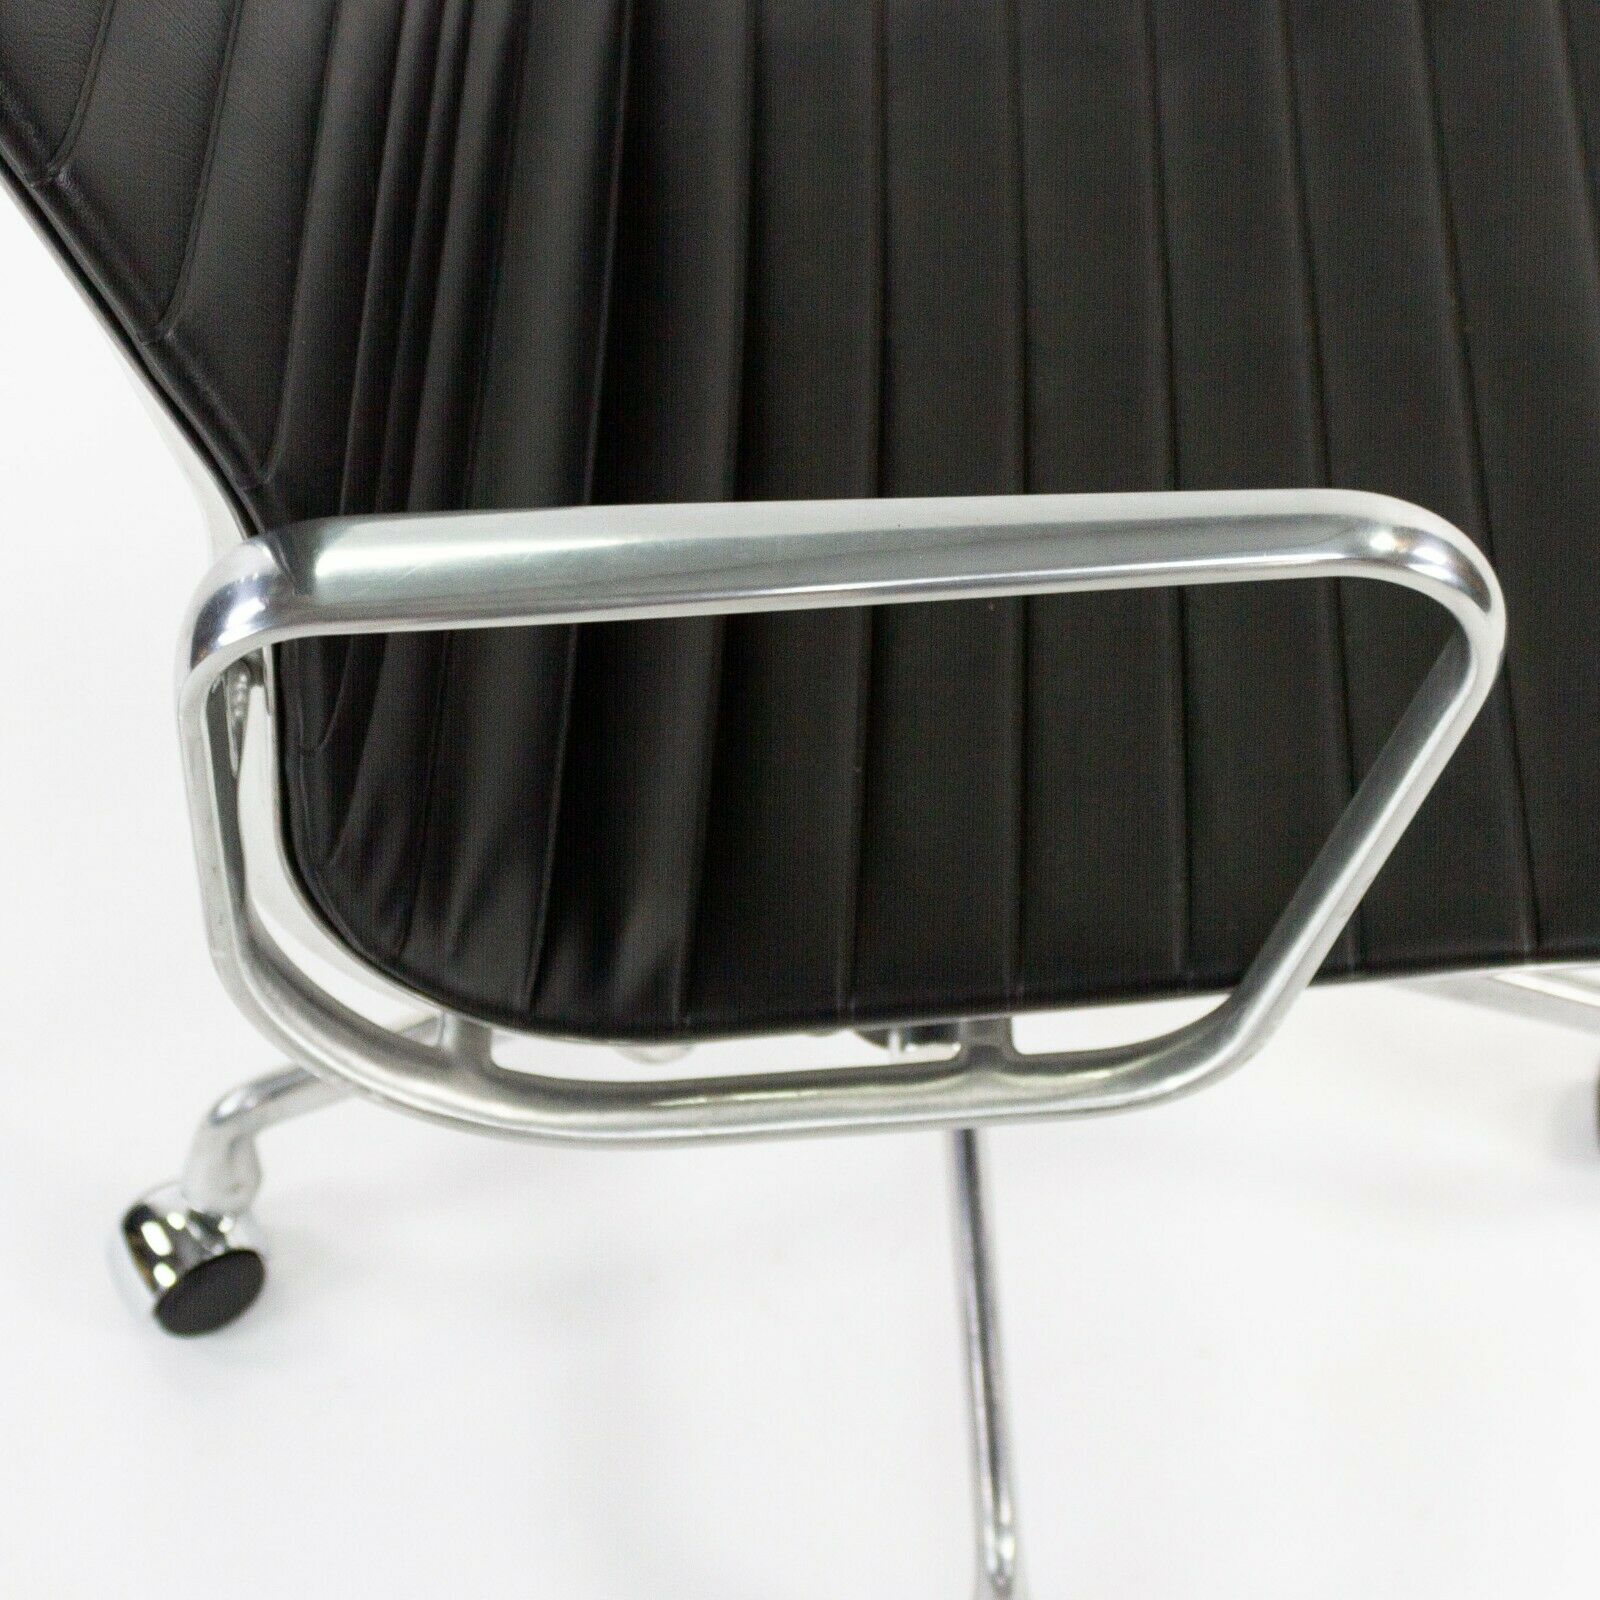 SOLD 2007 Herman Miller Eames Aluminum Group Management Desk Chair in Black Naugahyde